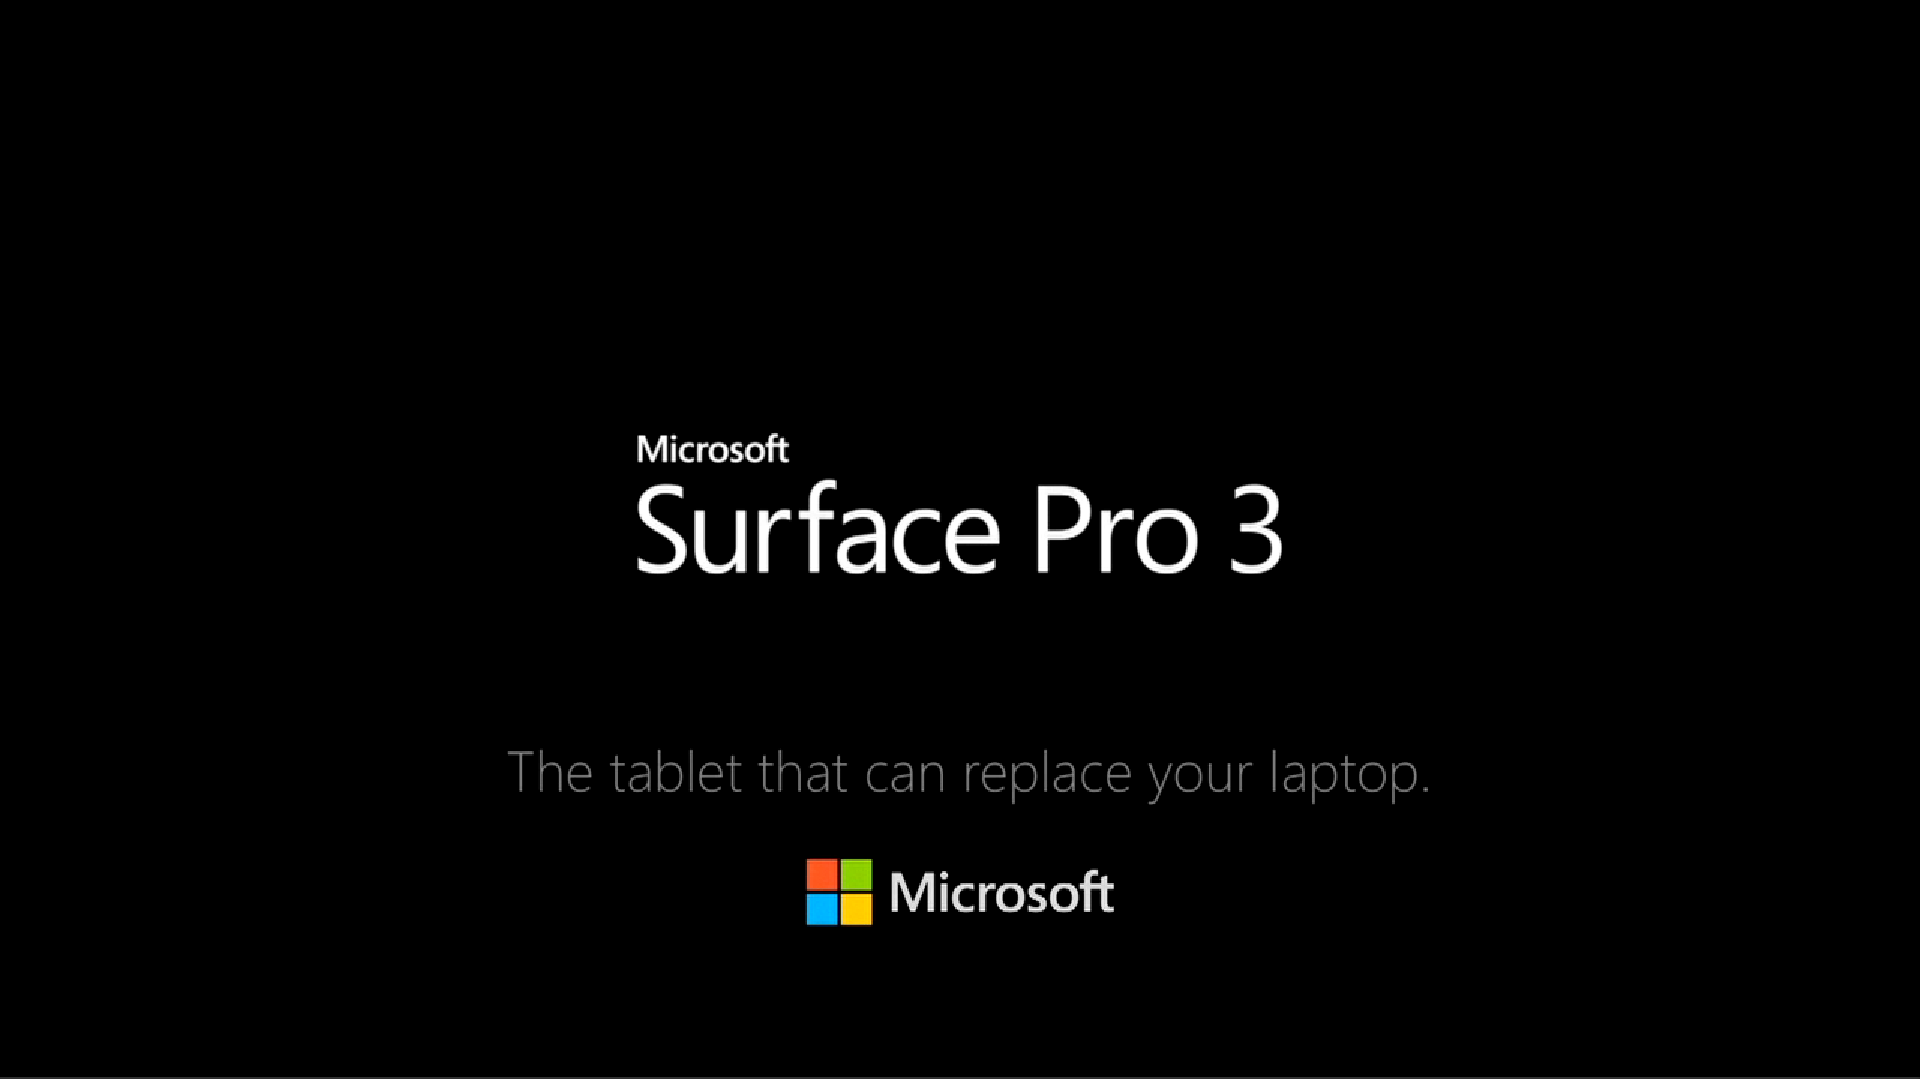 Tags Microsoft Surface Pro